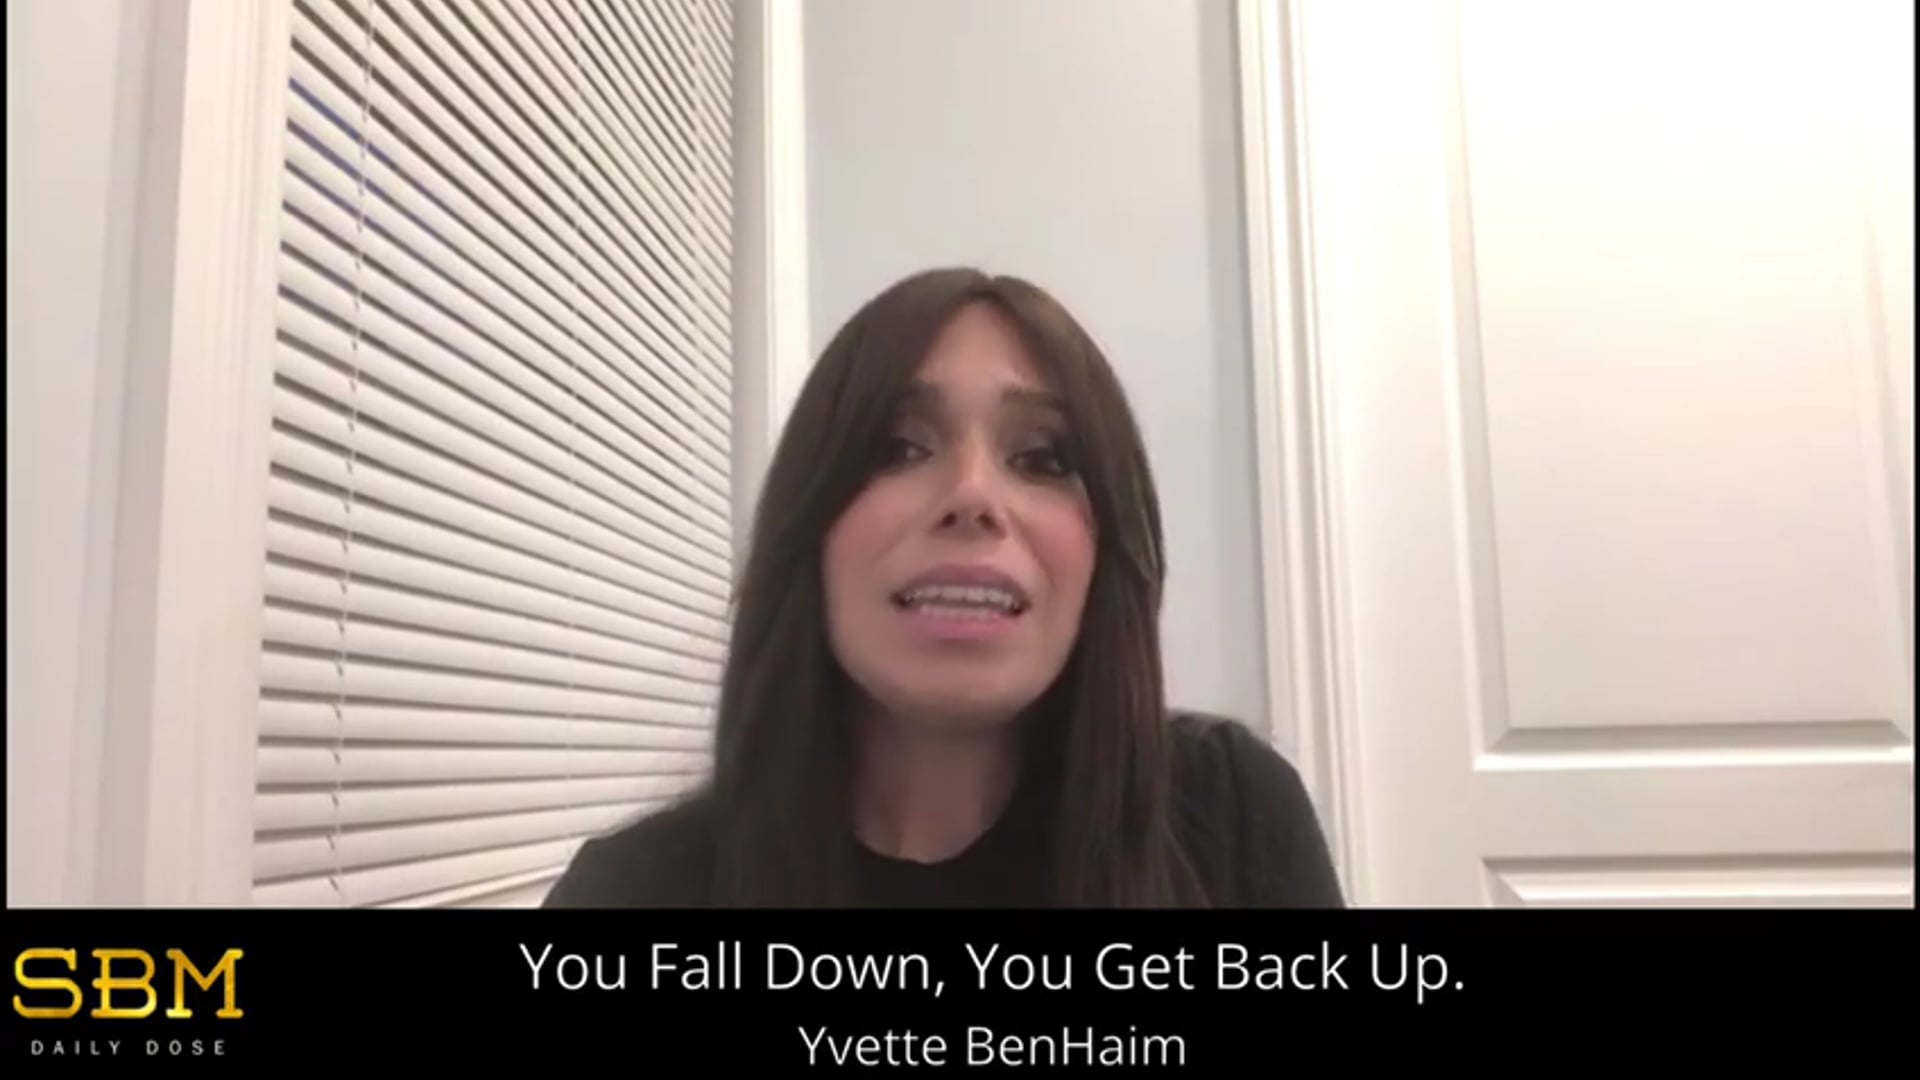 You Fall Down, You Get Back Up - Yvette BenHaim